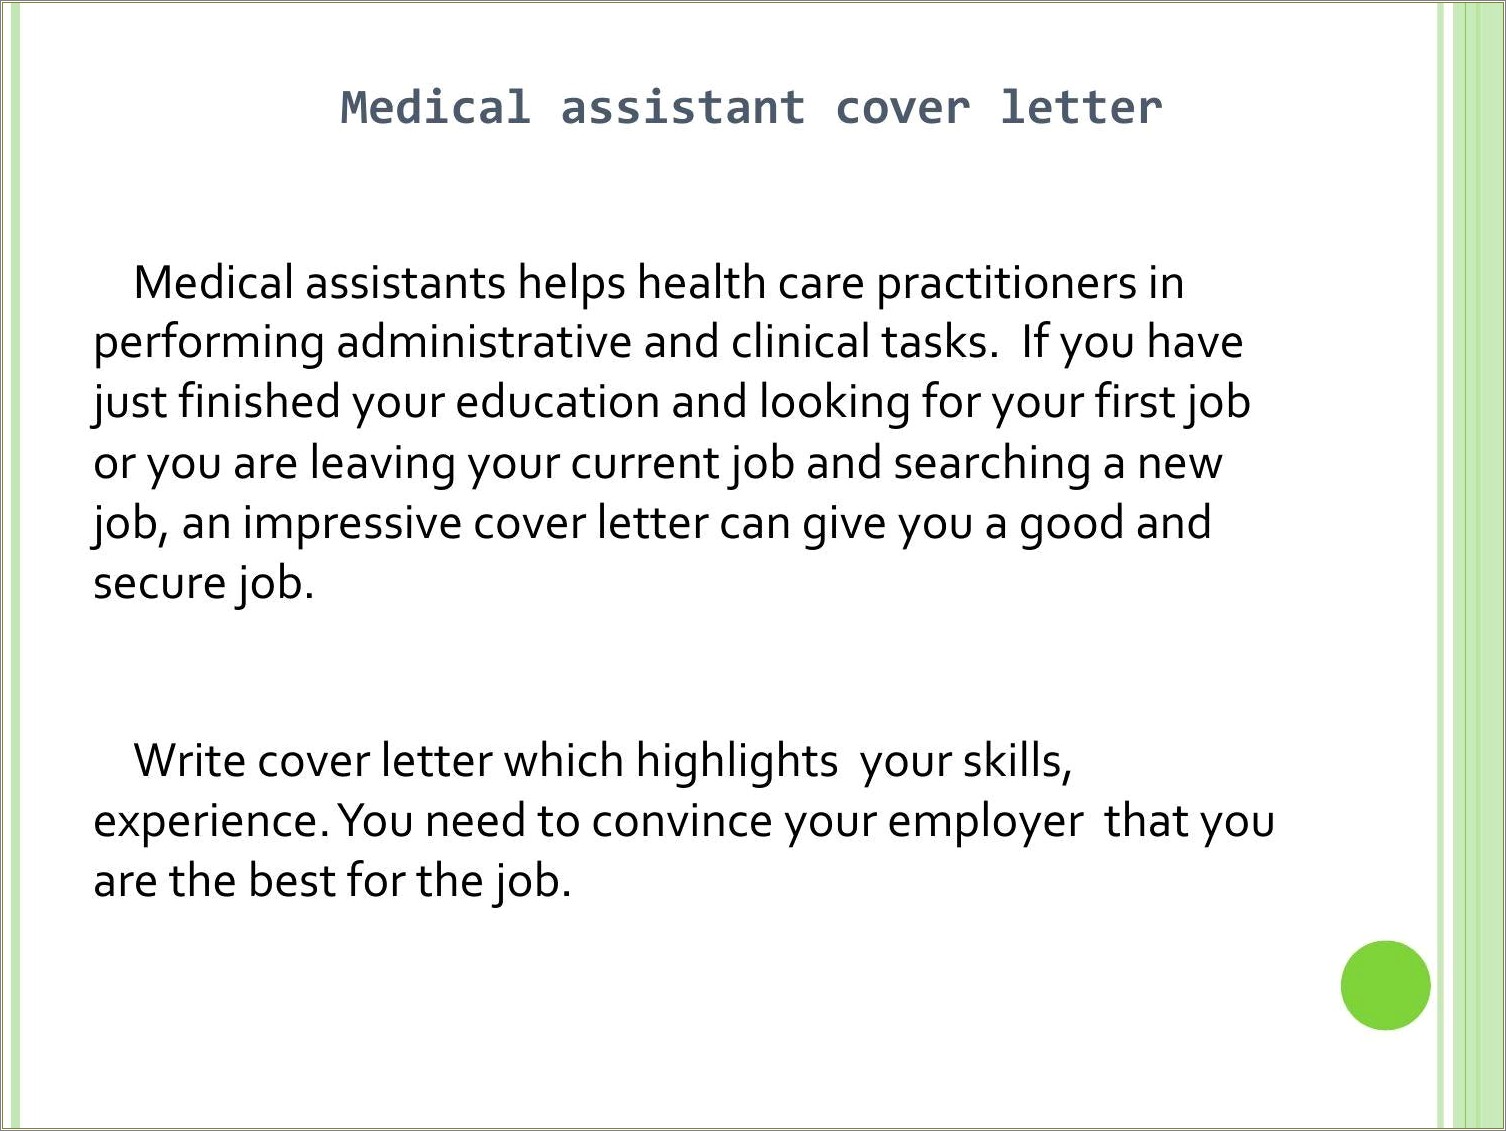 Resume Cover Letter For Medical Assistant Position